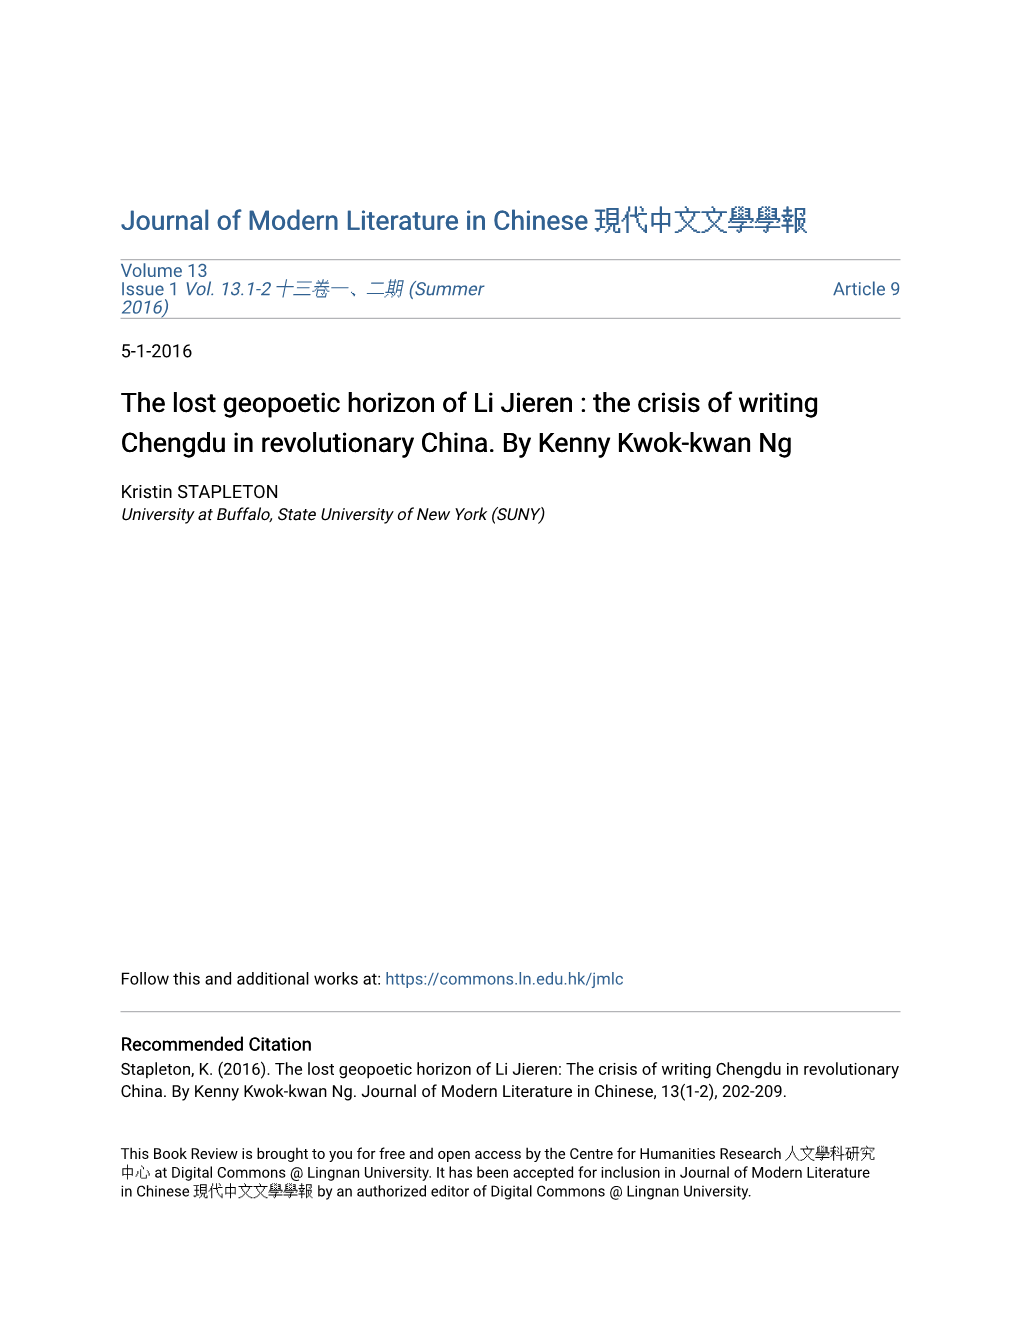 The Lost Geopoetic Horizon of Li Jieren : the Crisis of Writing Chengdu in Revolutionary China